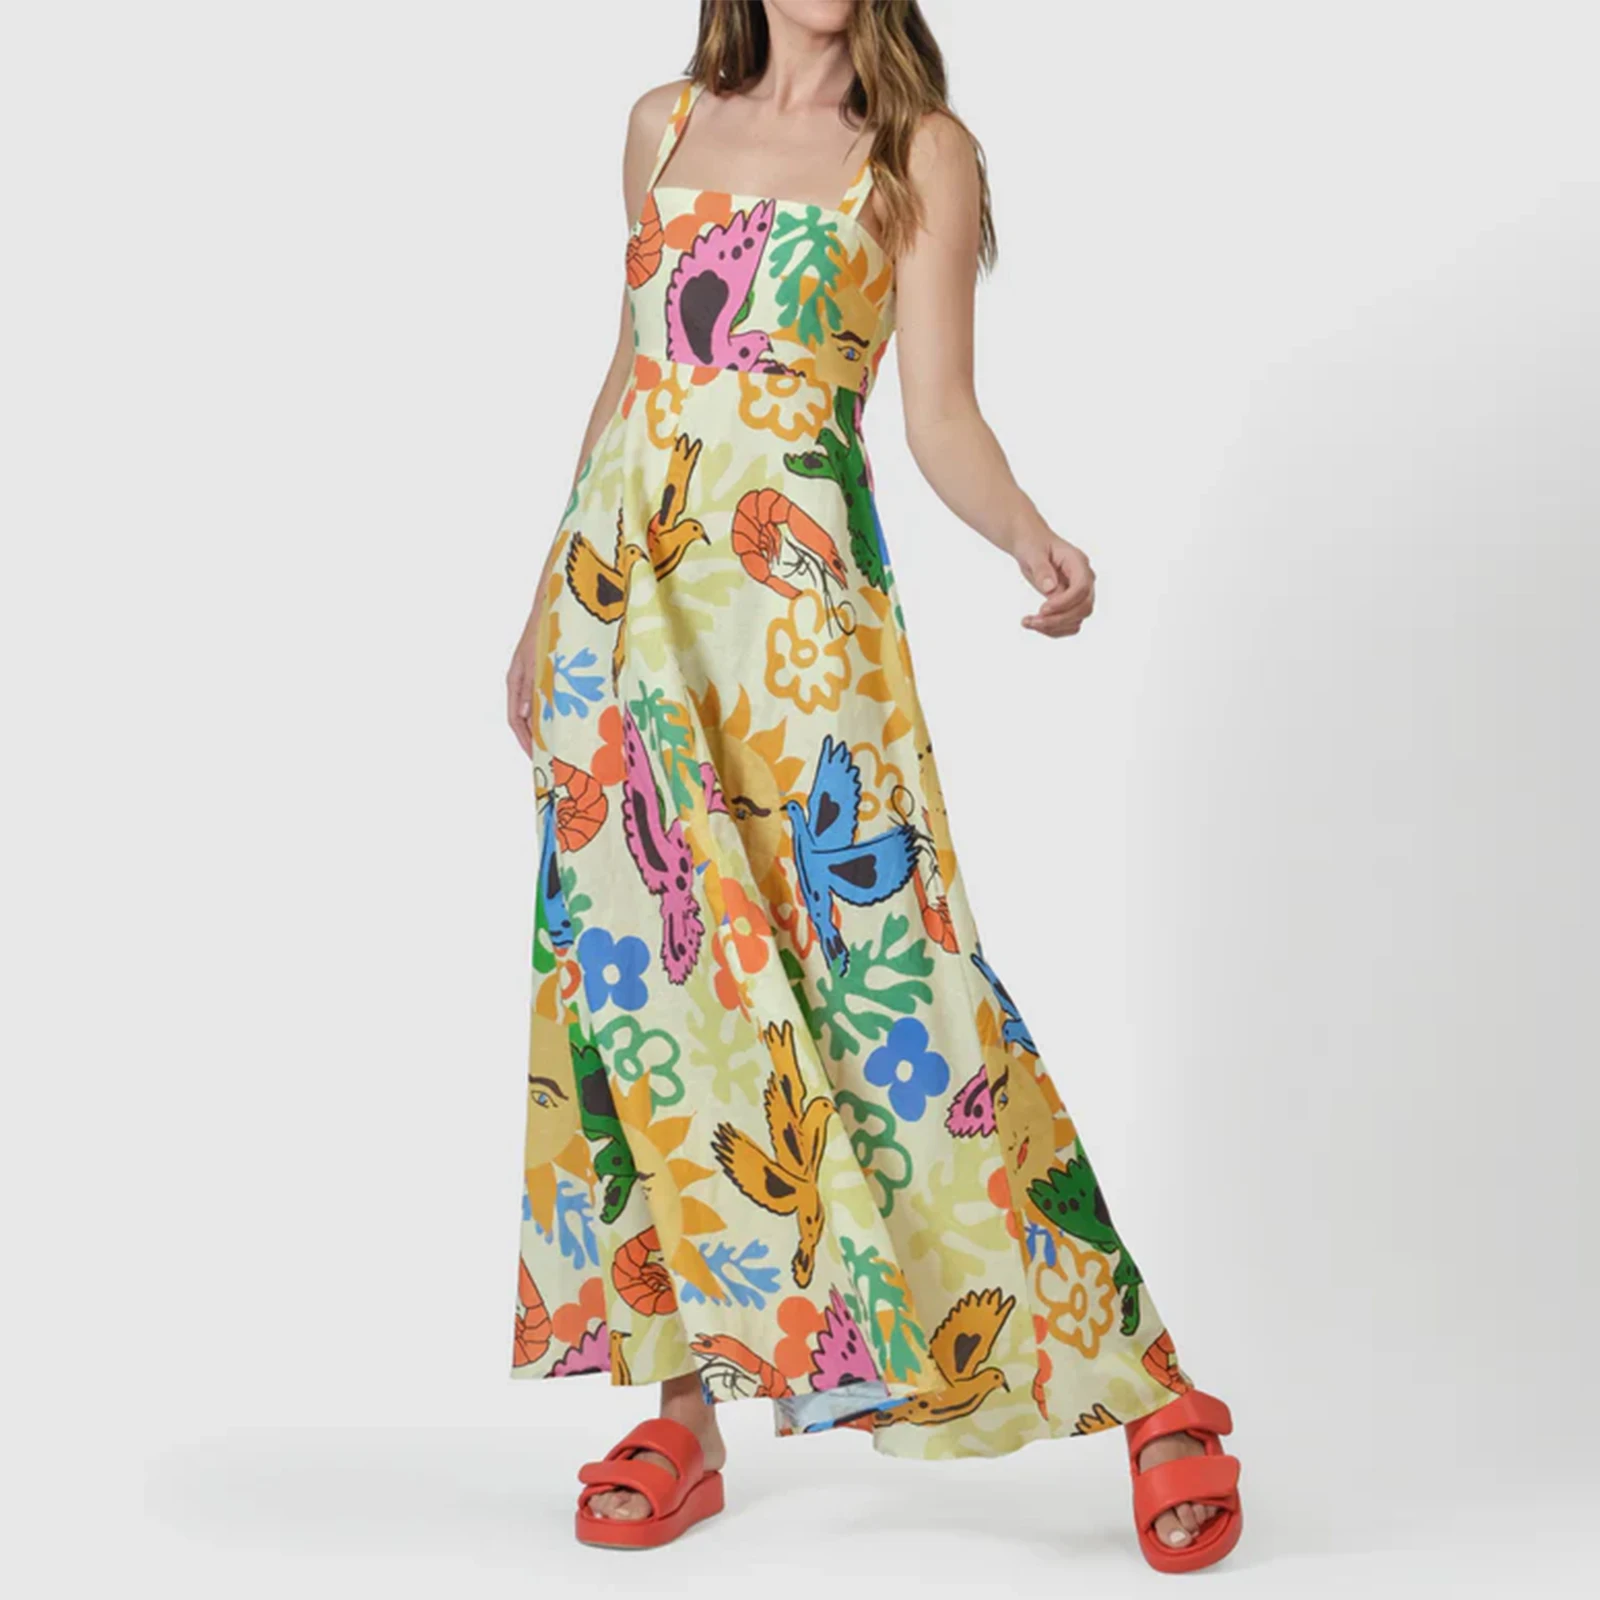 

Women s Summer Boho Spaghetti Strap Square Neck Floral Print Dress Casual Flowy Long Dress Beach Swing Party Maxi Dress